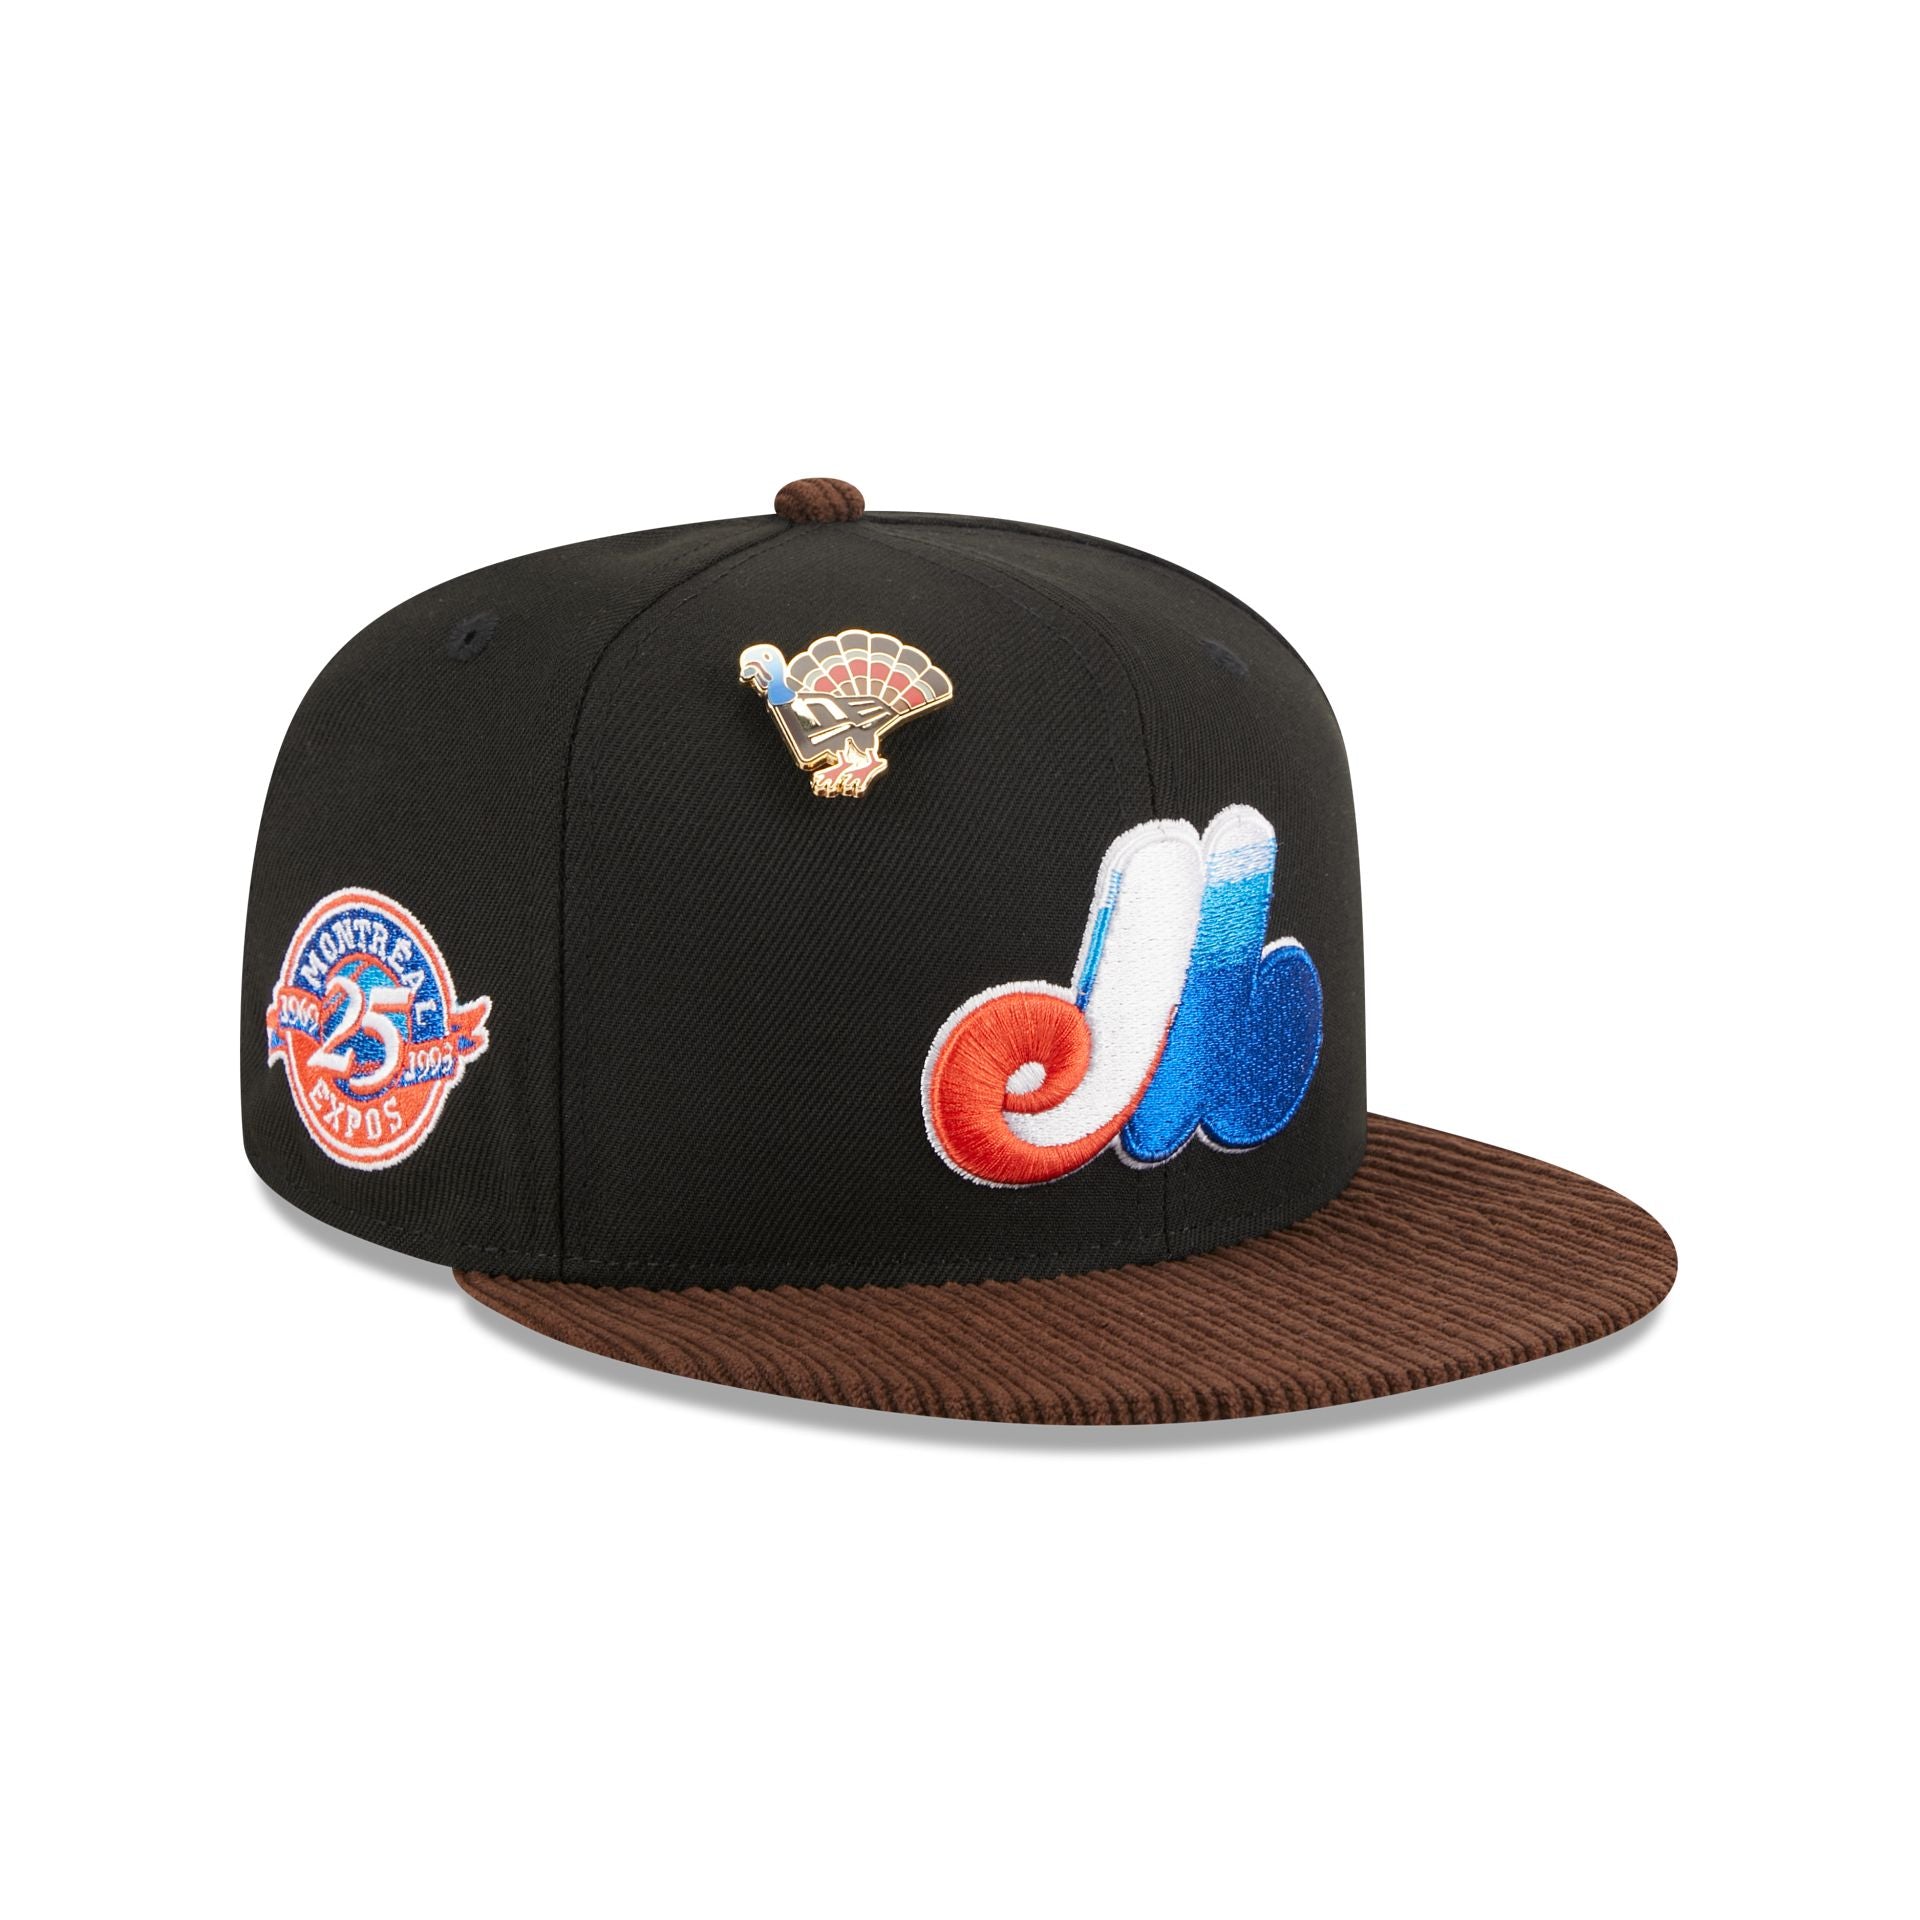 New Era 9FIFTY MLB Montreal Expos Basic Snapback Hat